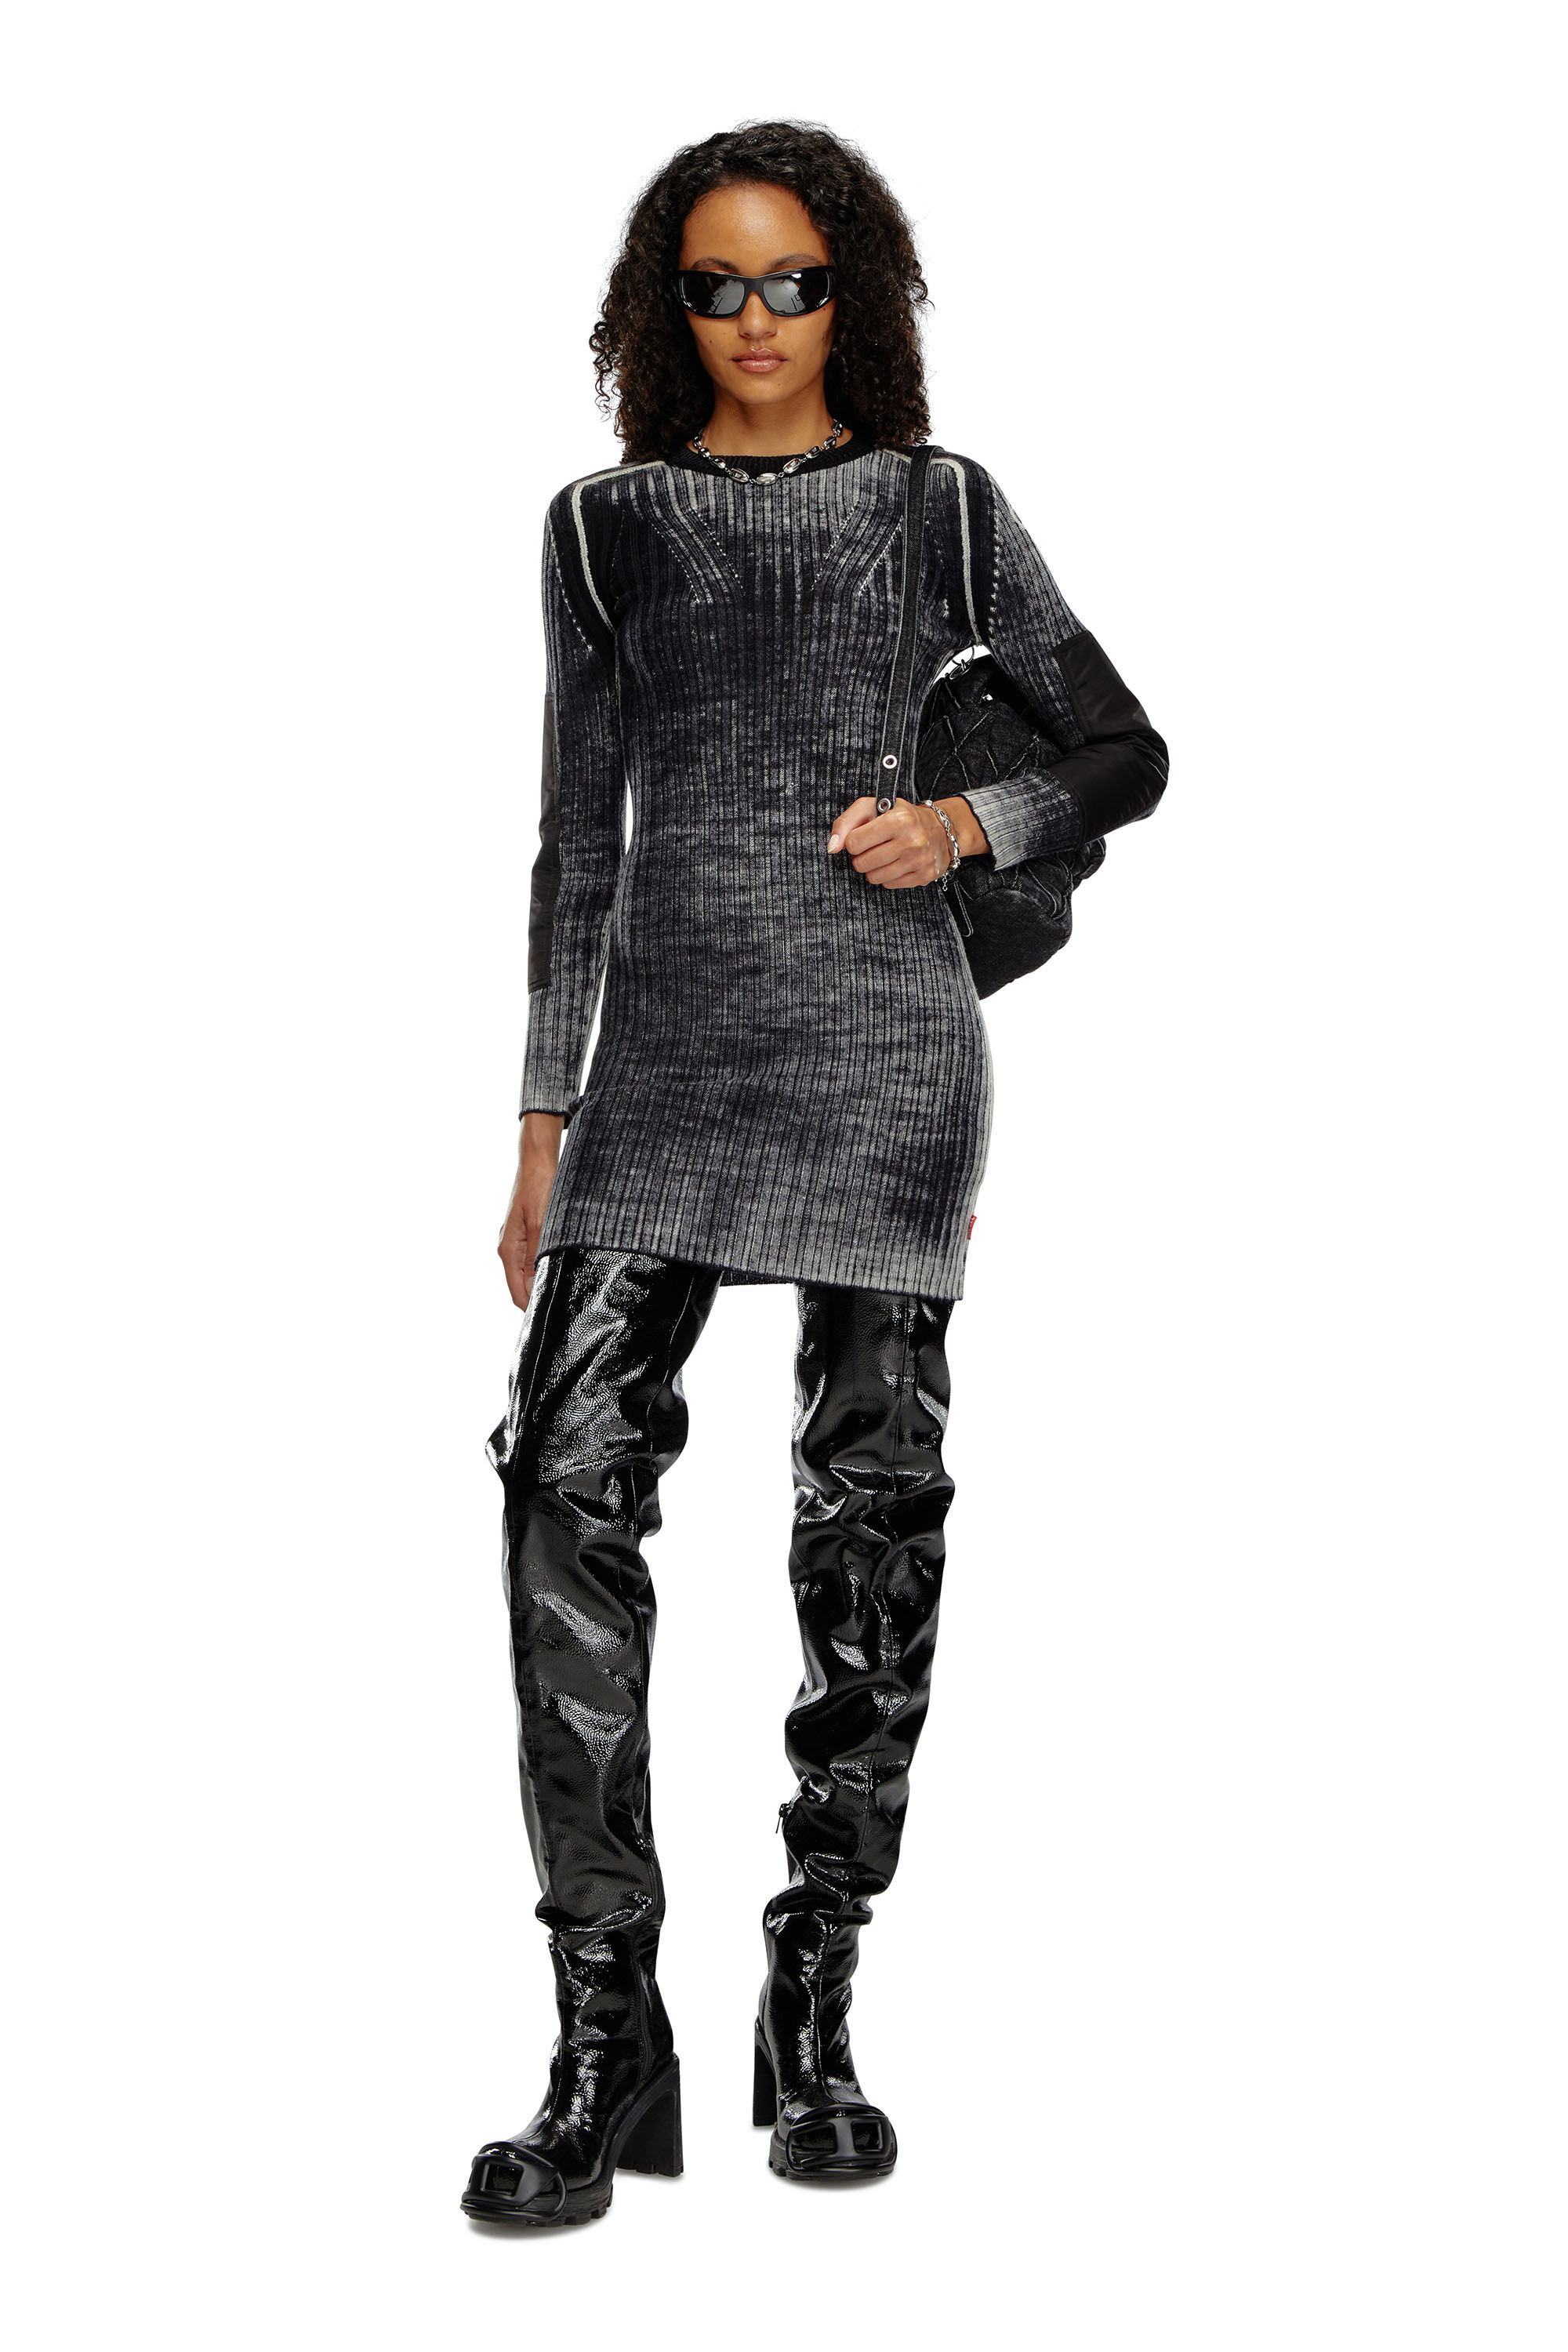 Diesel - M-ARTISTA, Femme Robe courte en maille de laine traitée in Noir - Image 1